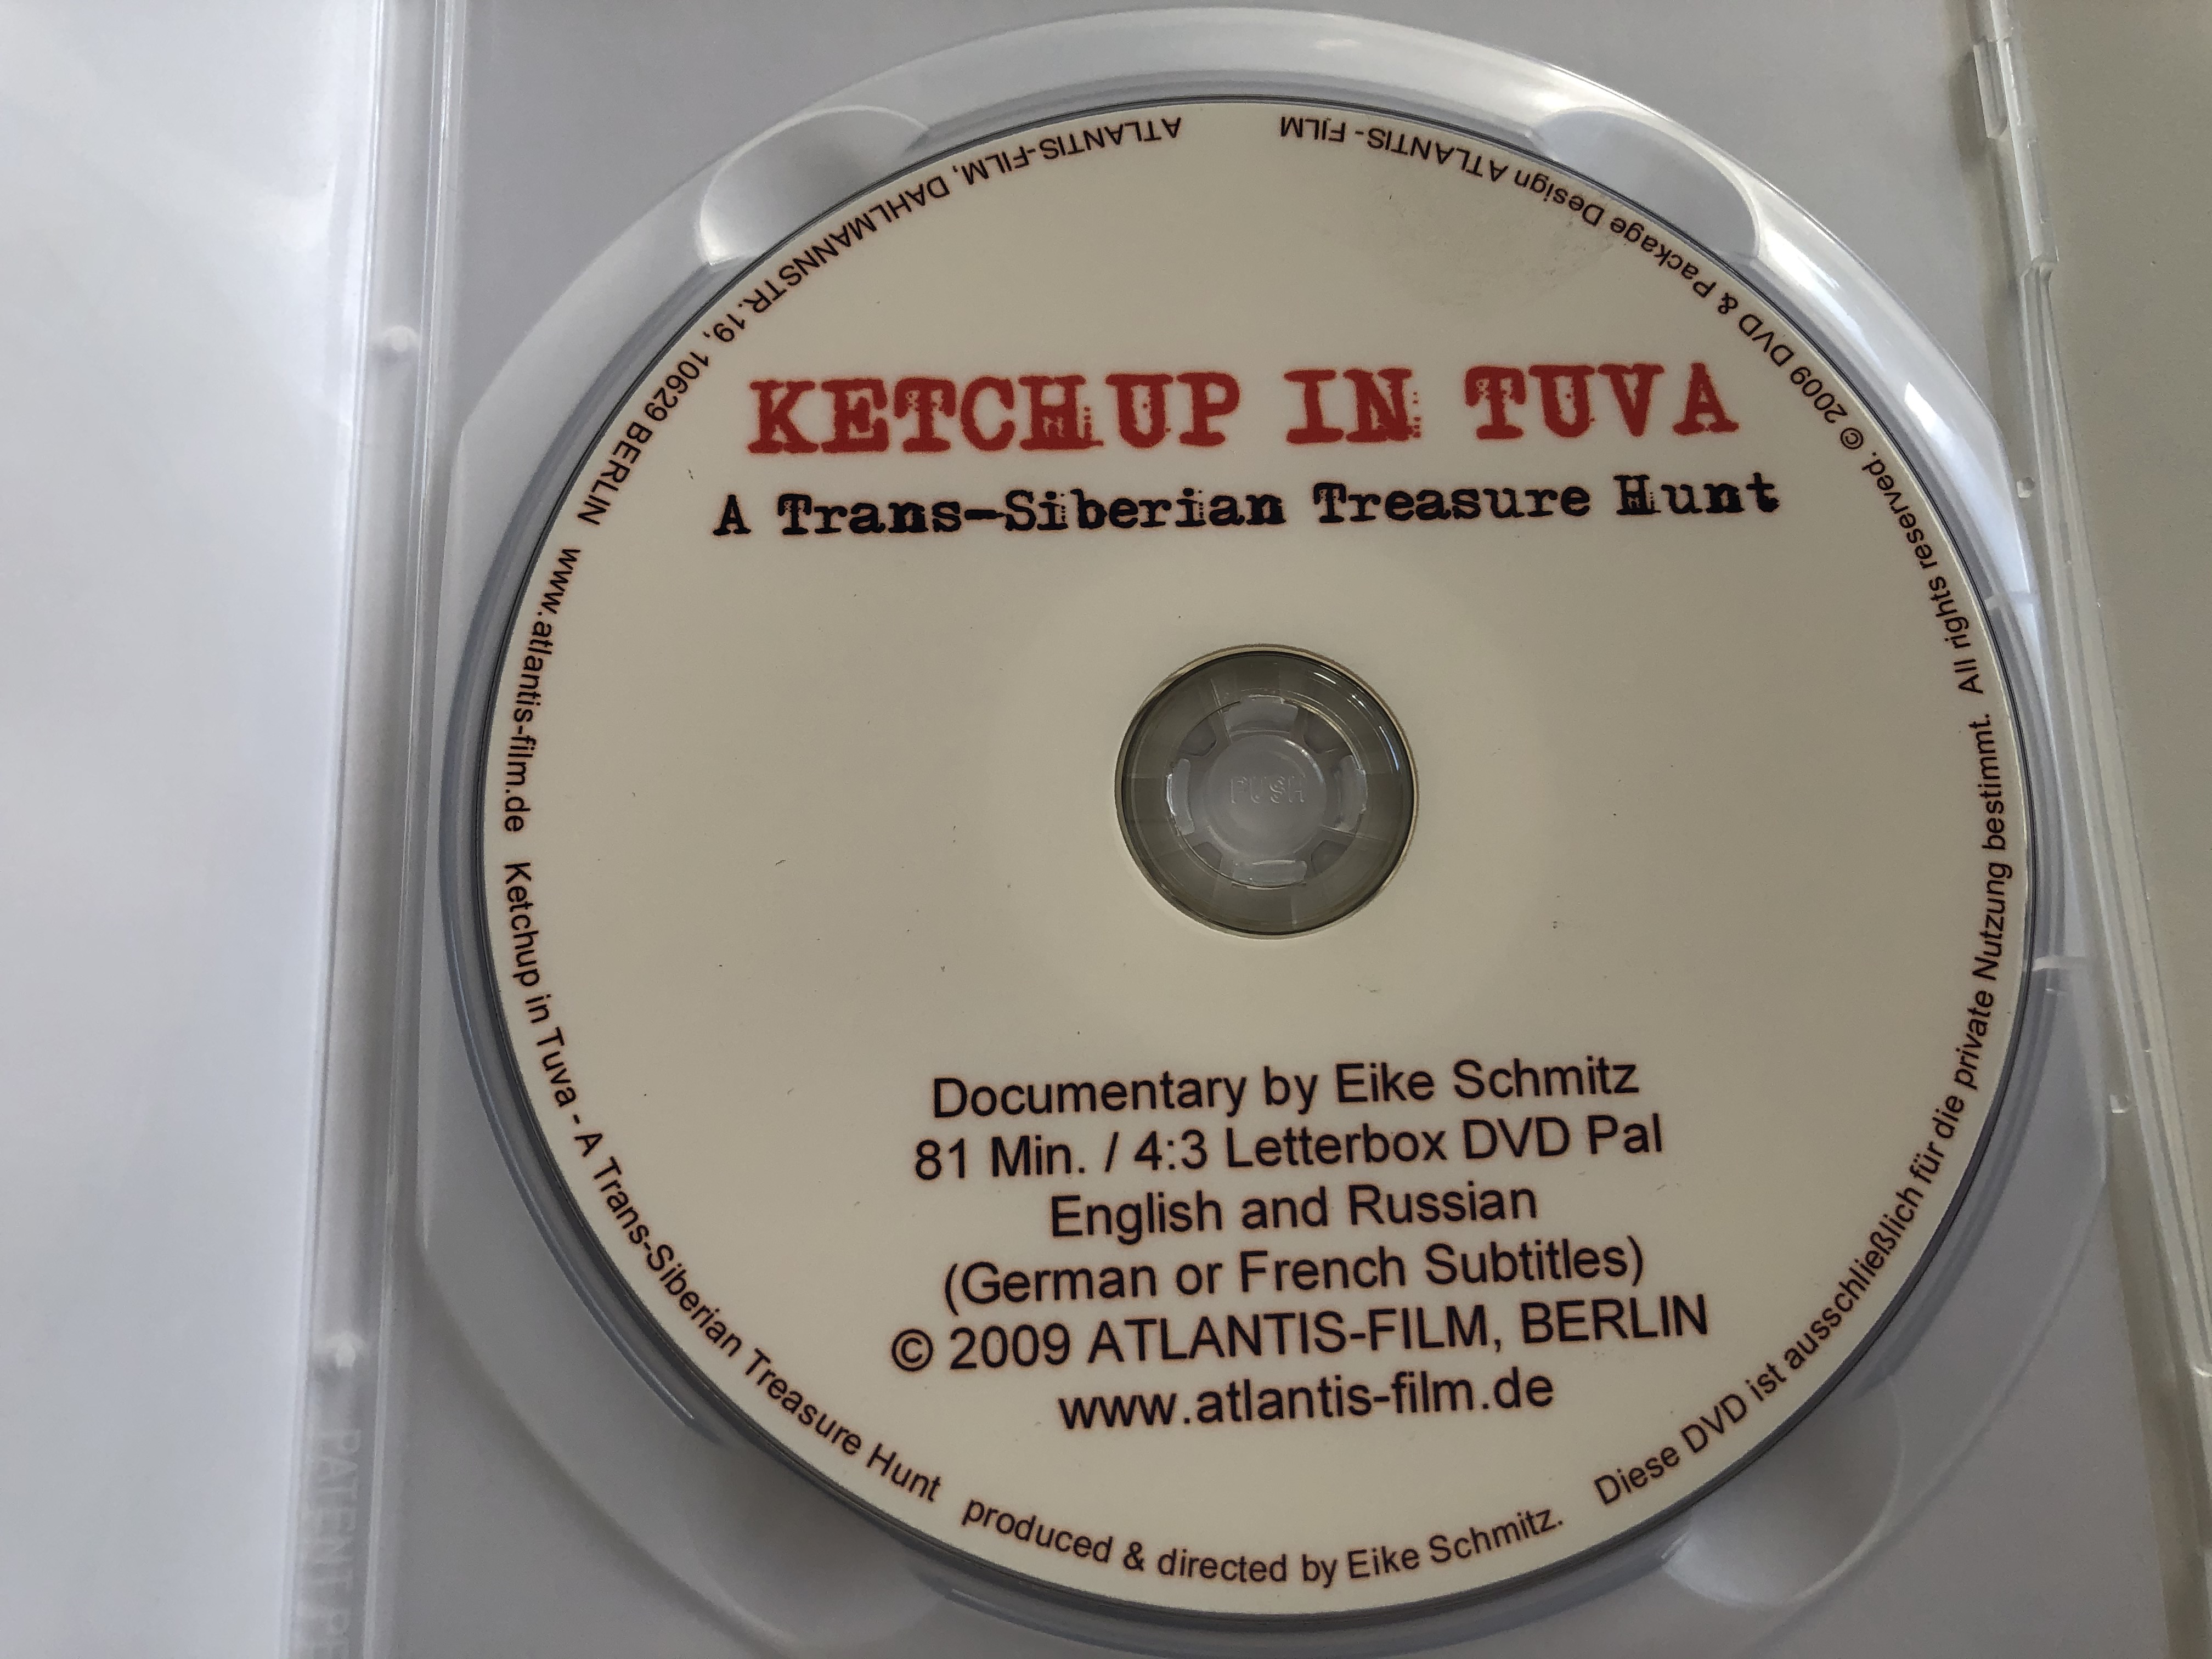 ketchup-in-tuva-a-trans-siberian-treasure-hunt-dvd-2009-2-.jpg